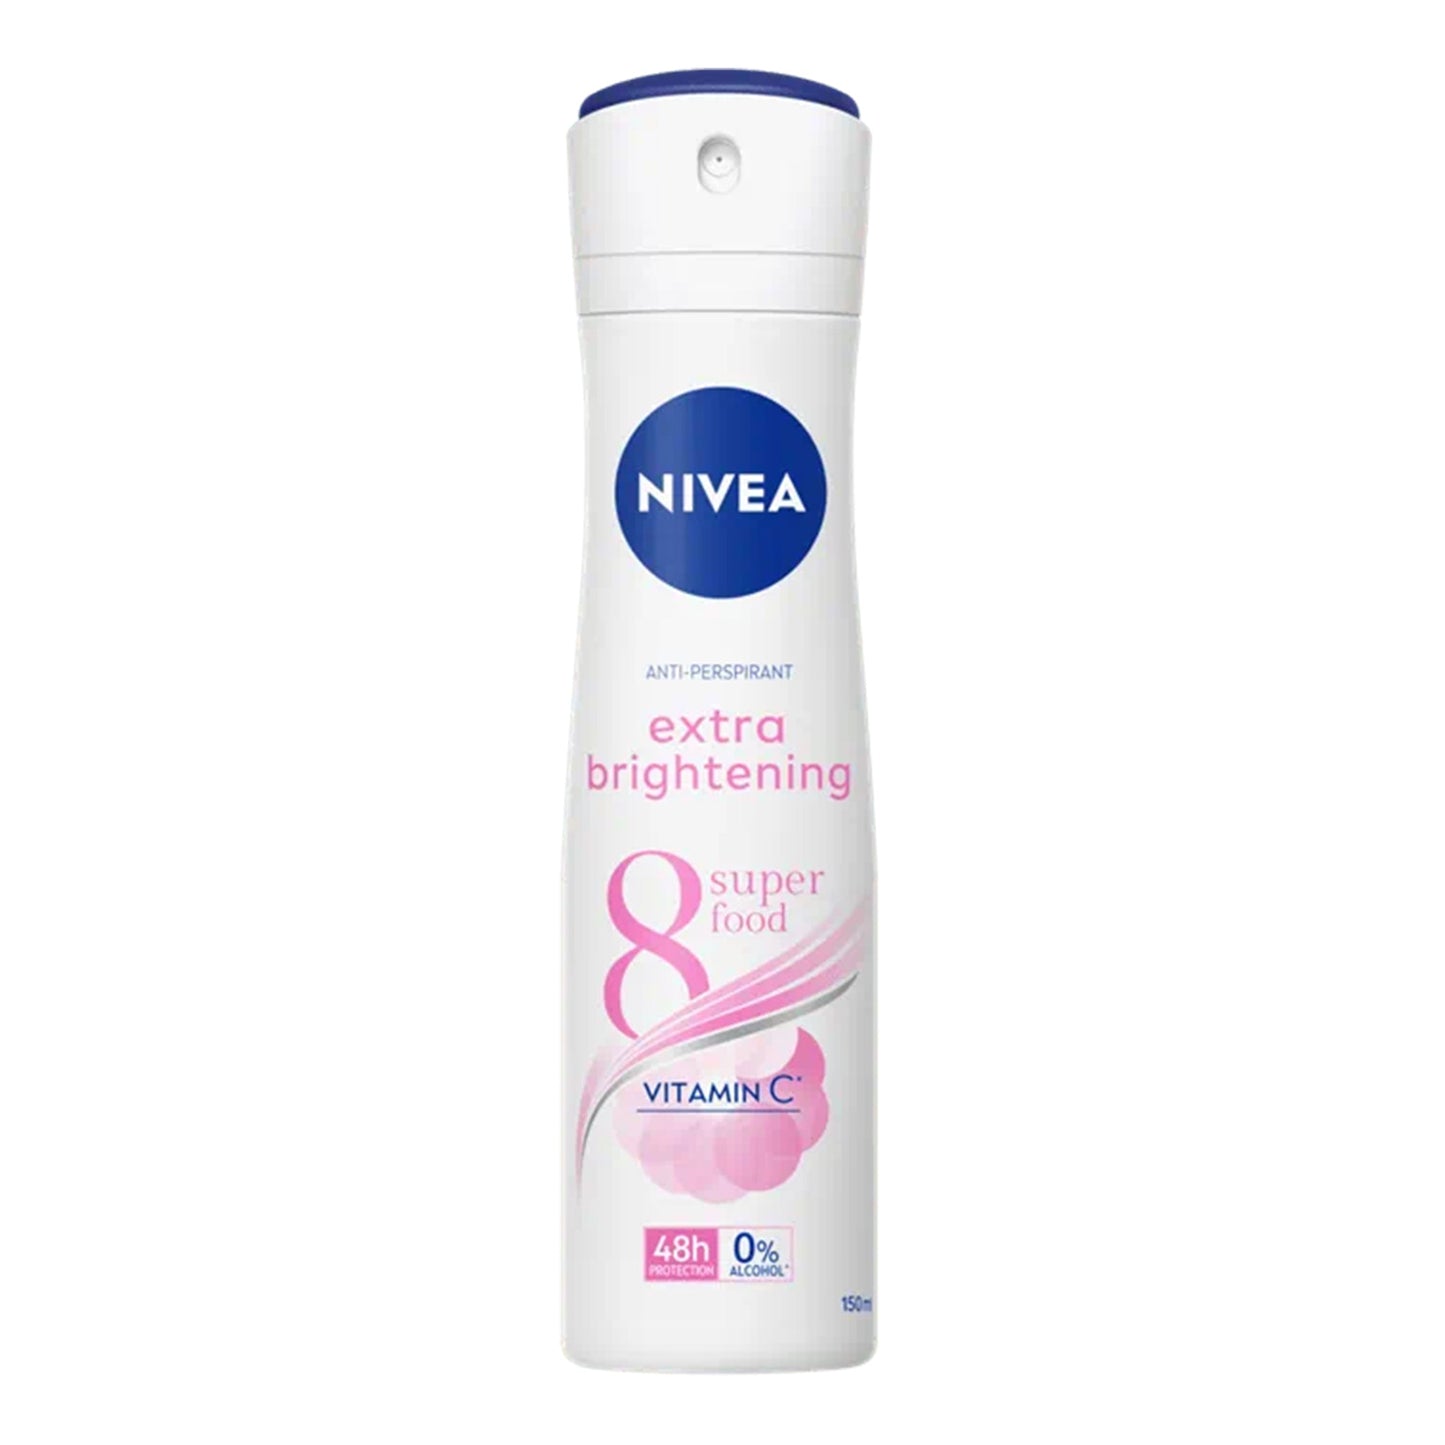 Nivea - Extra Brightening 8 Super Food 48H Anti-Perspirant Deodorant Spray - 150ml